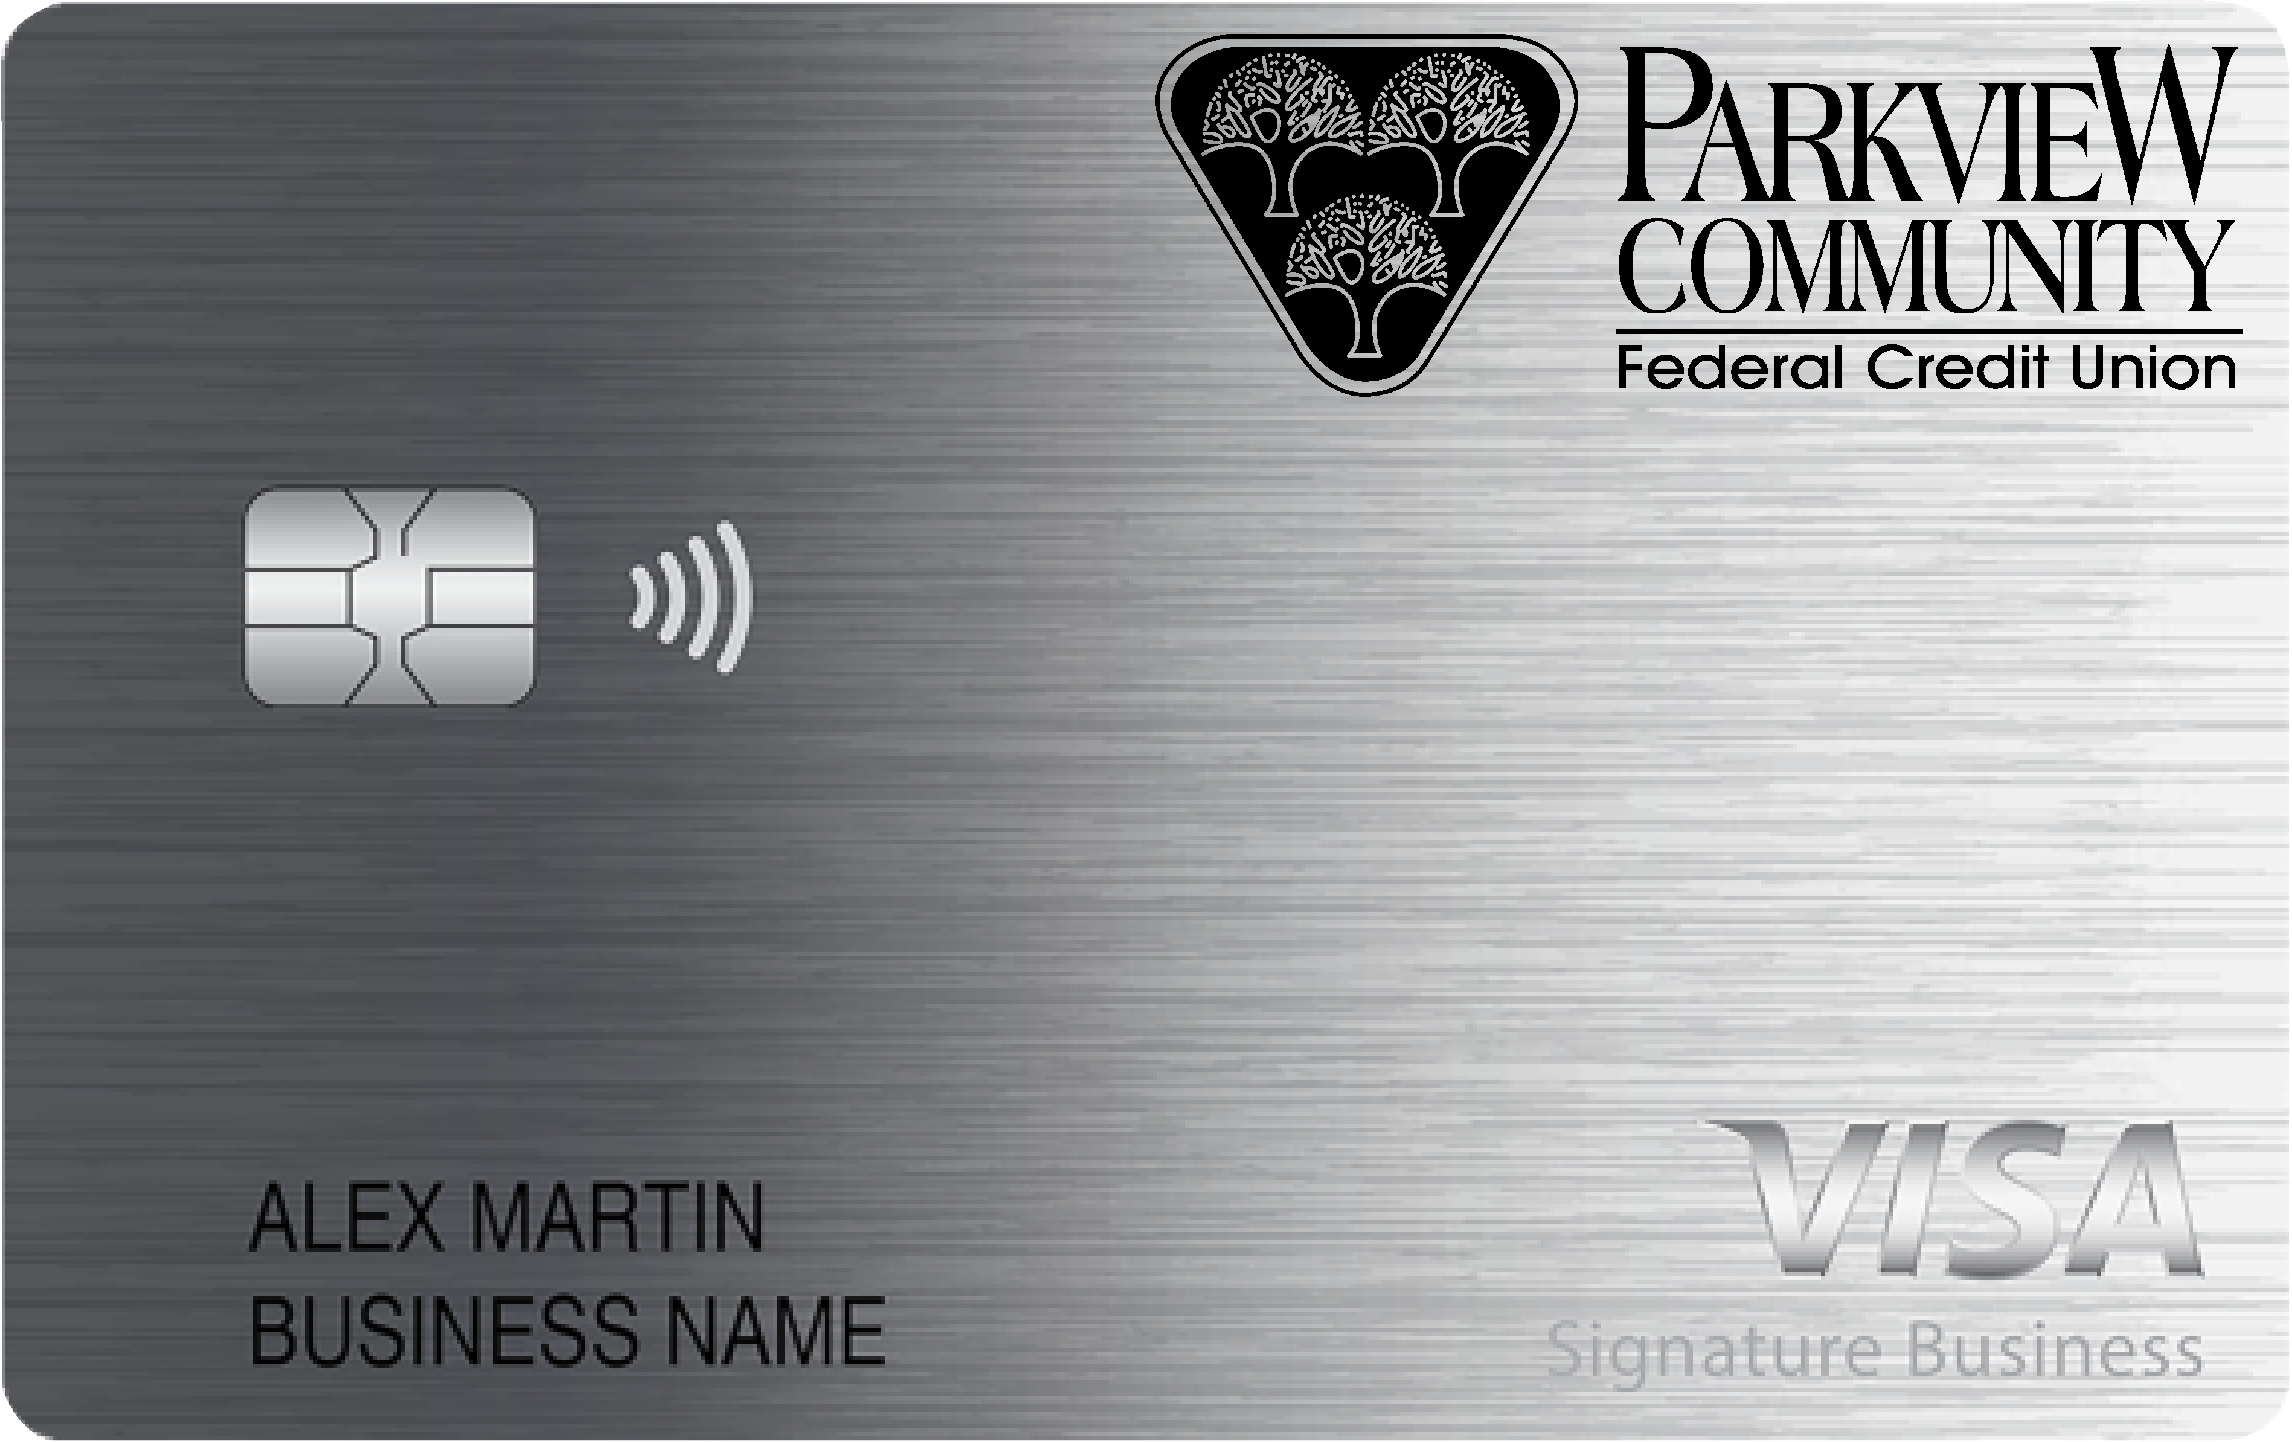 Parkview Community Federal Credit Union Smart Business Rewards Card